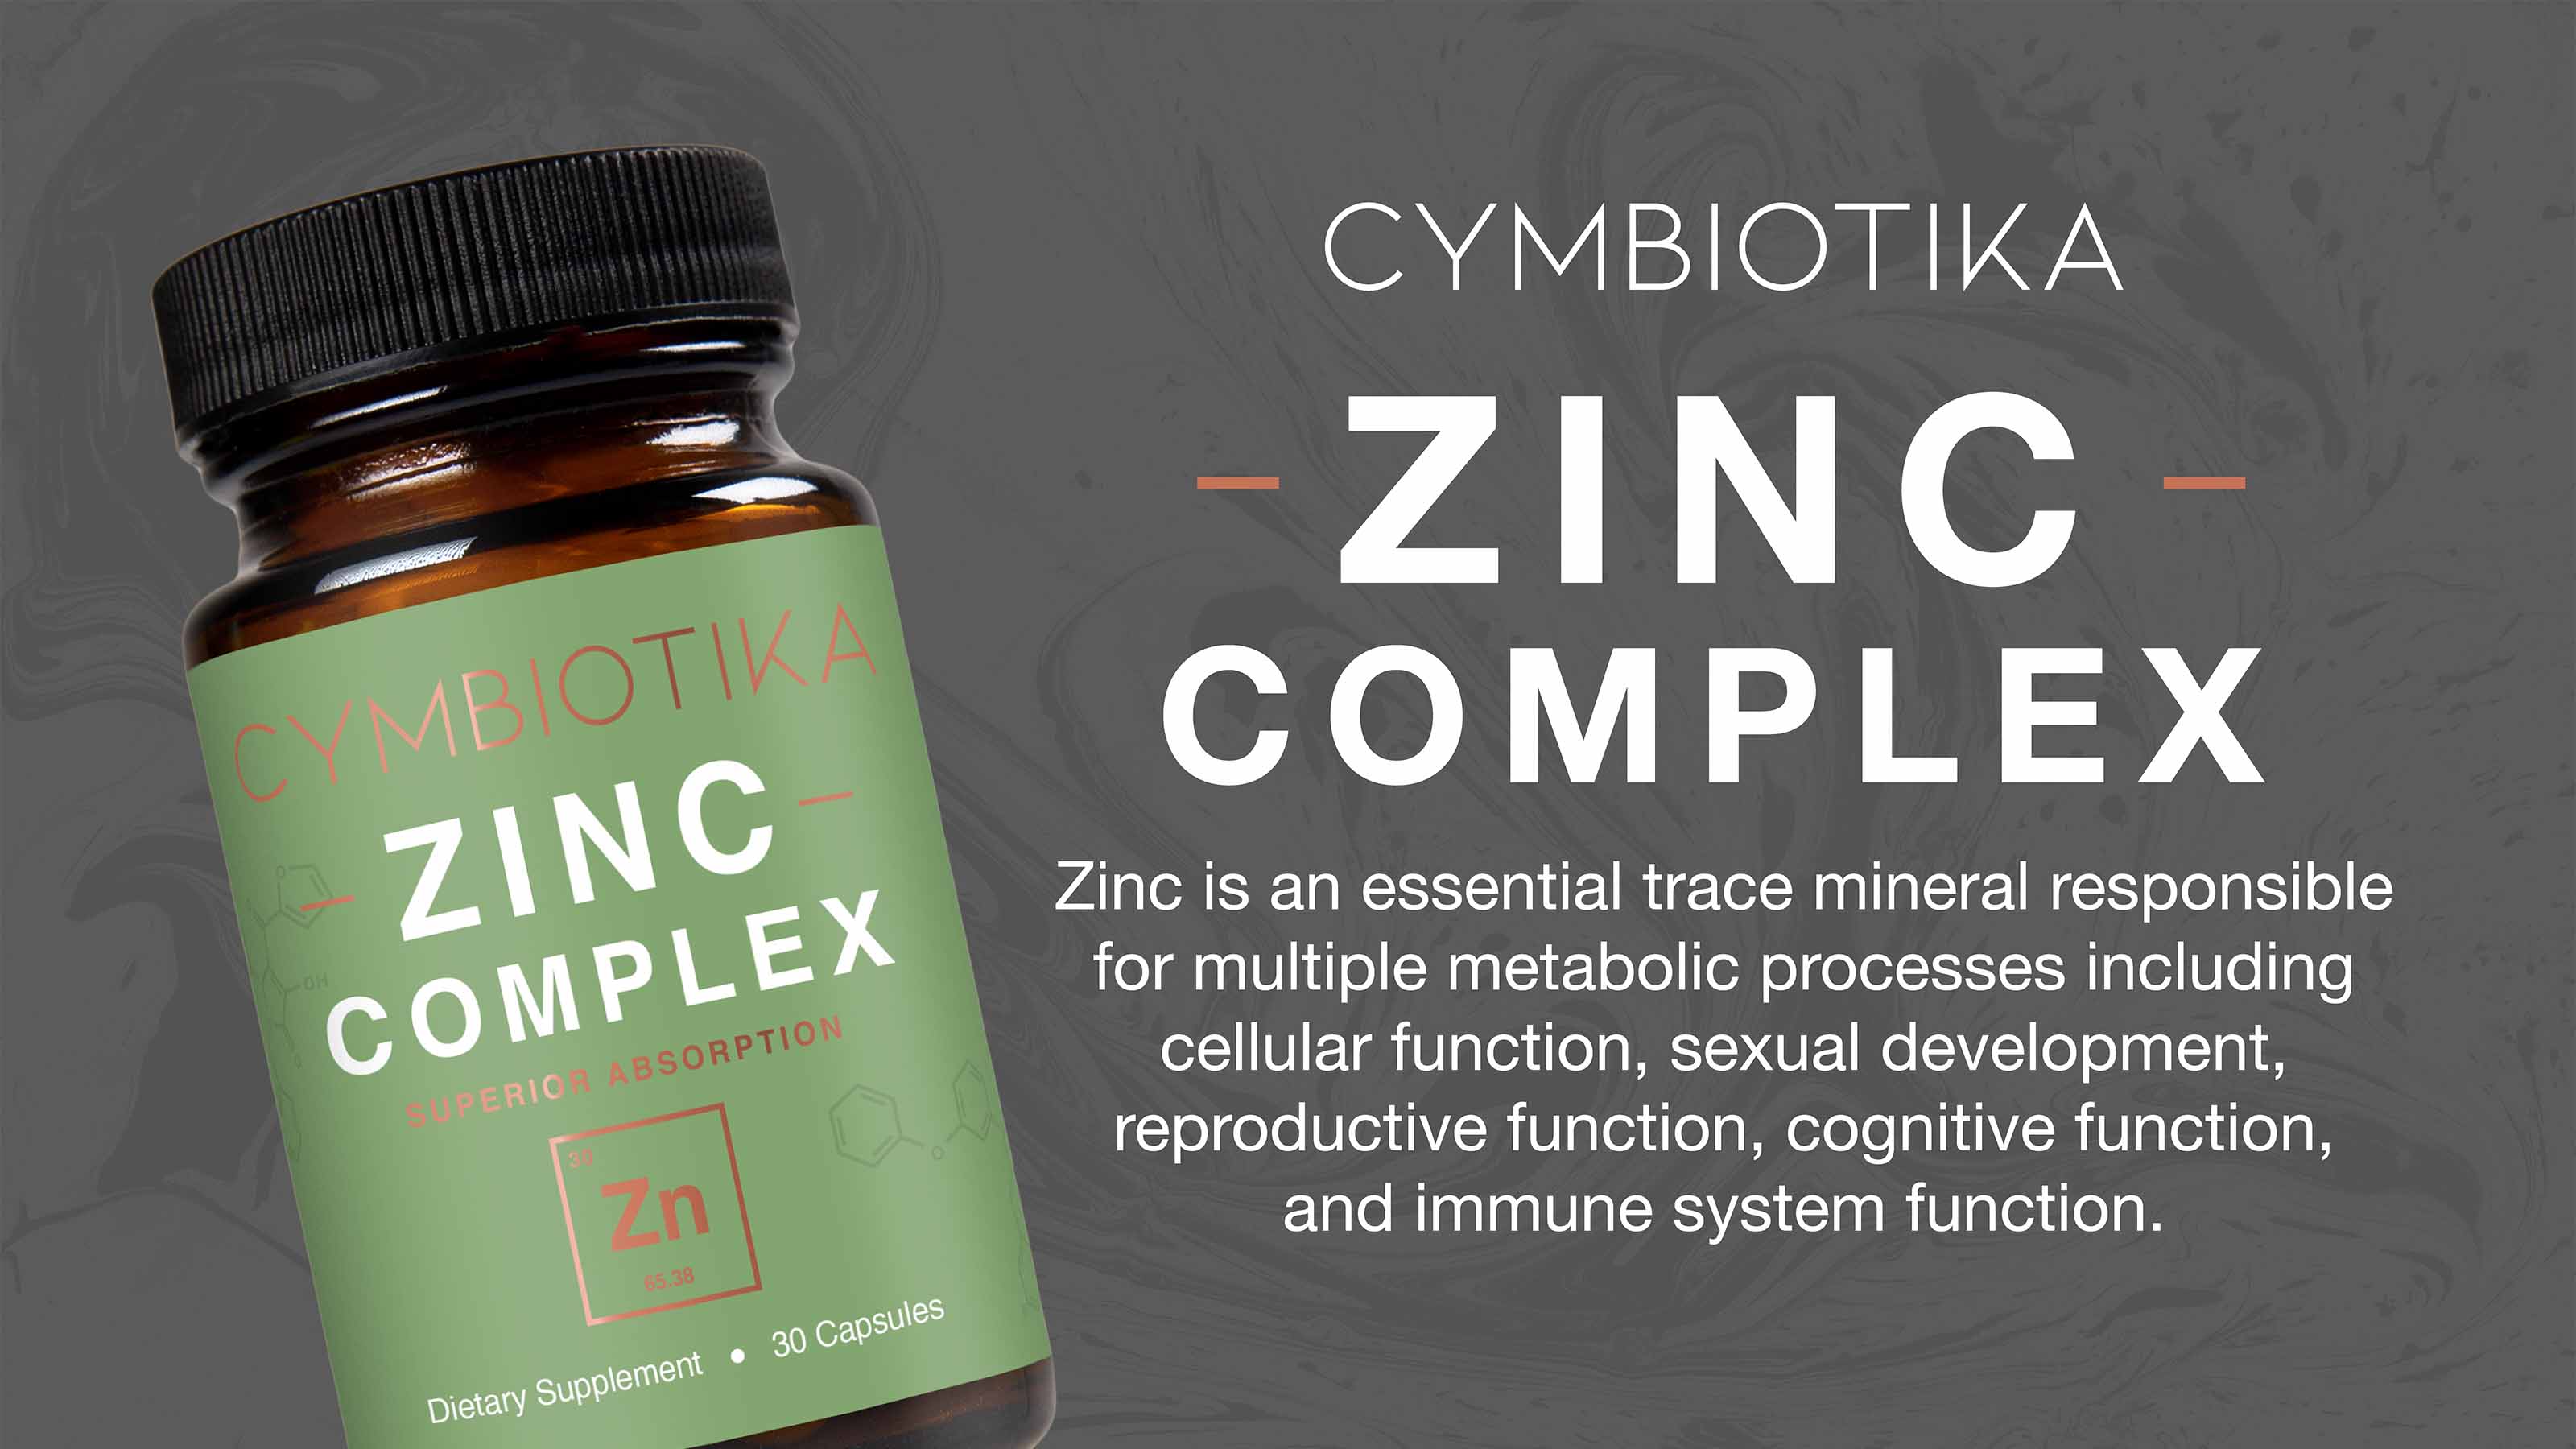 Cymbiotika ZINC Complex